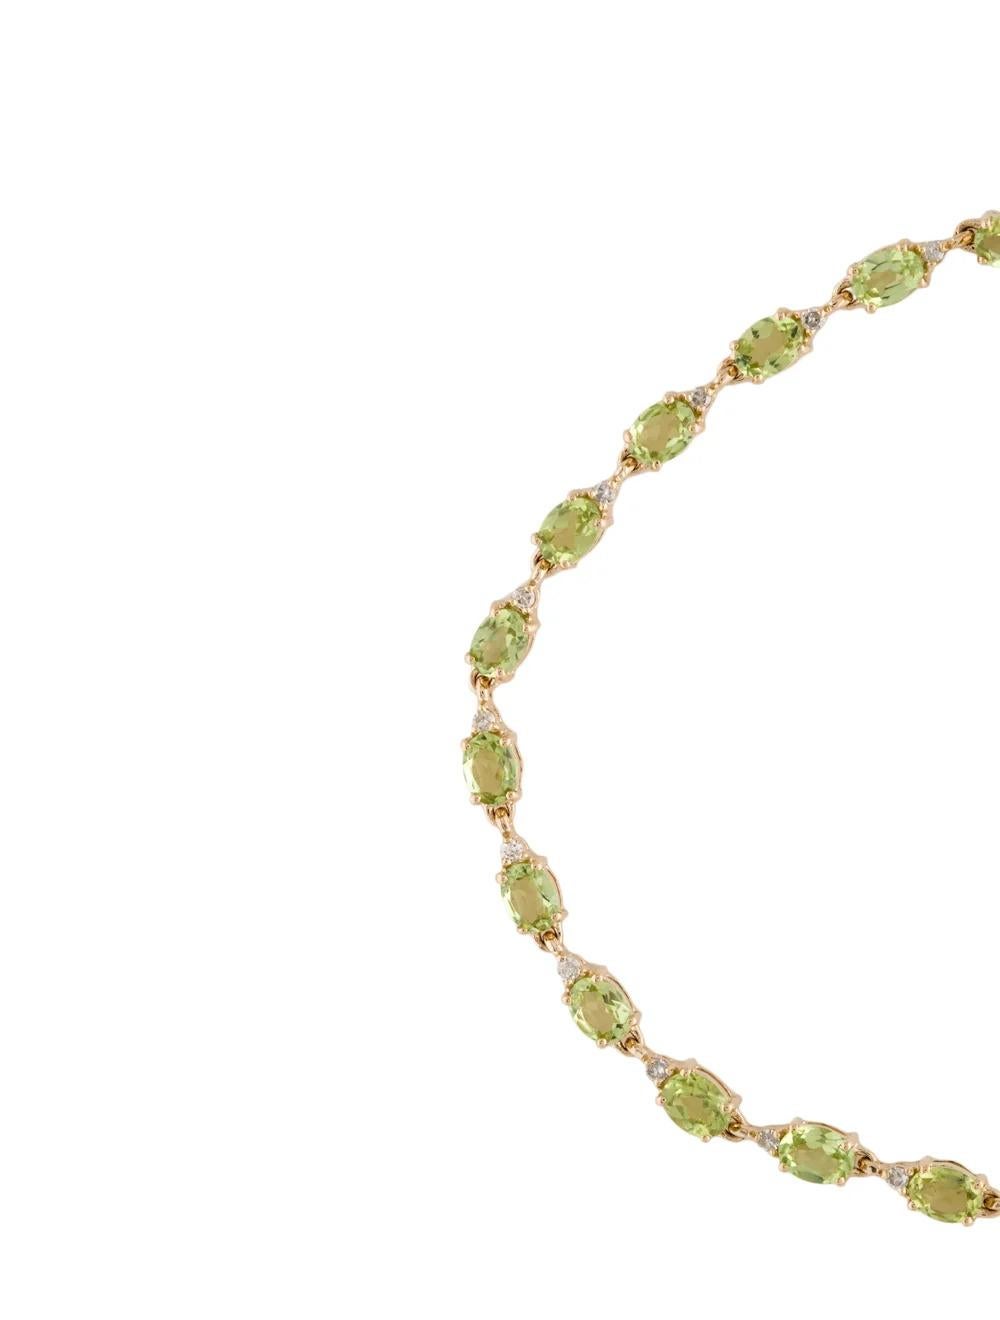 Oval Cut 14K Peridot & Diamond Link Bracelet - Elegant Design, Green Gemstones, Sparkling